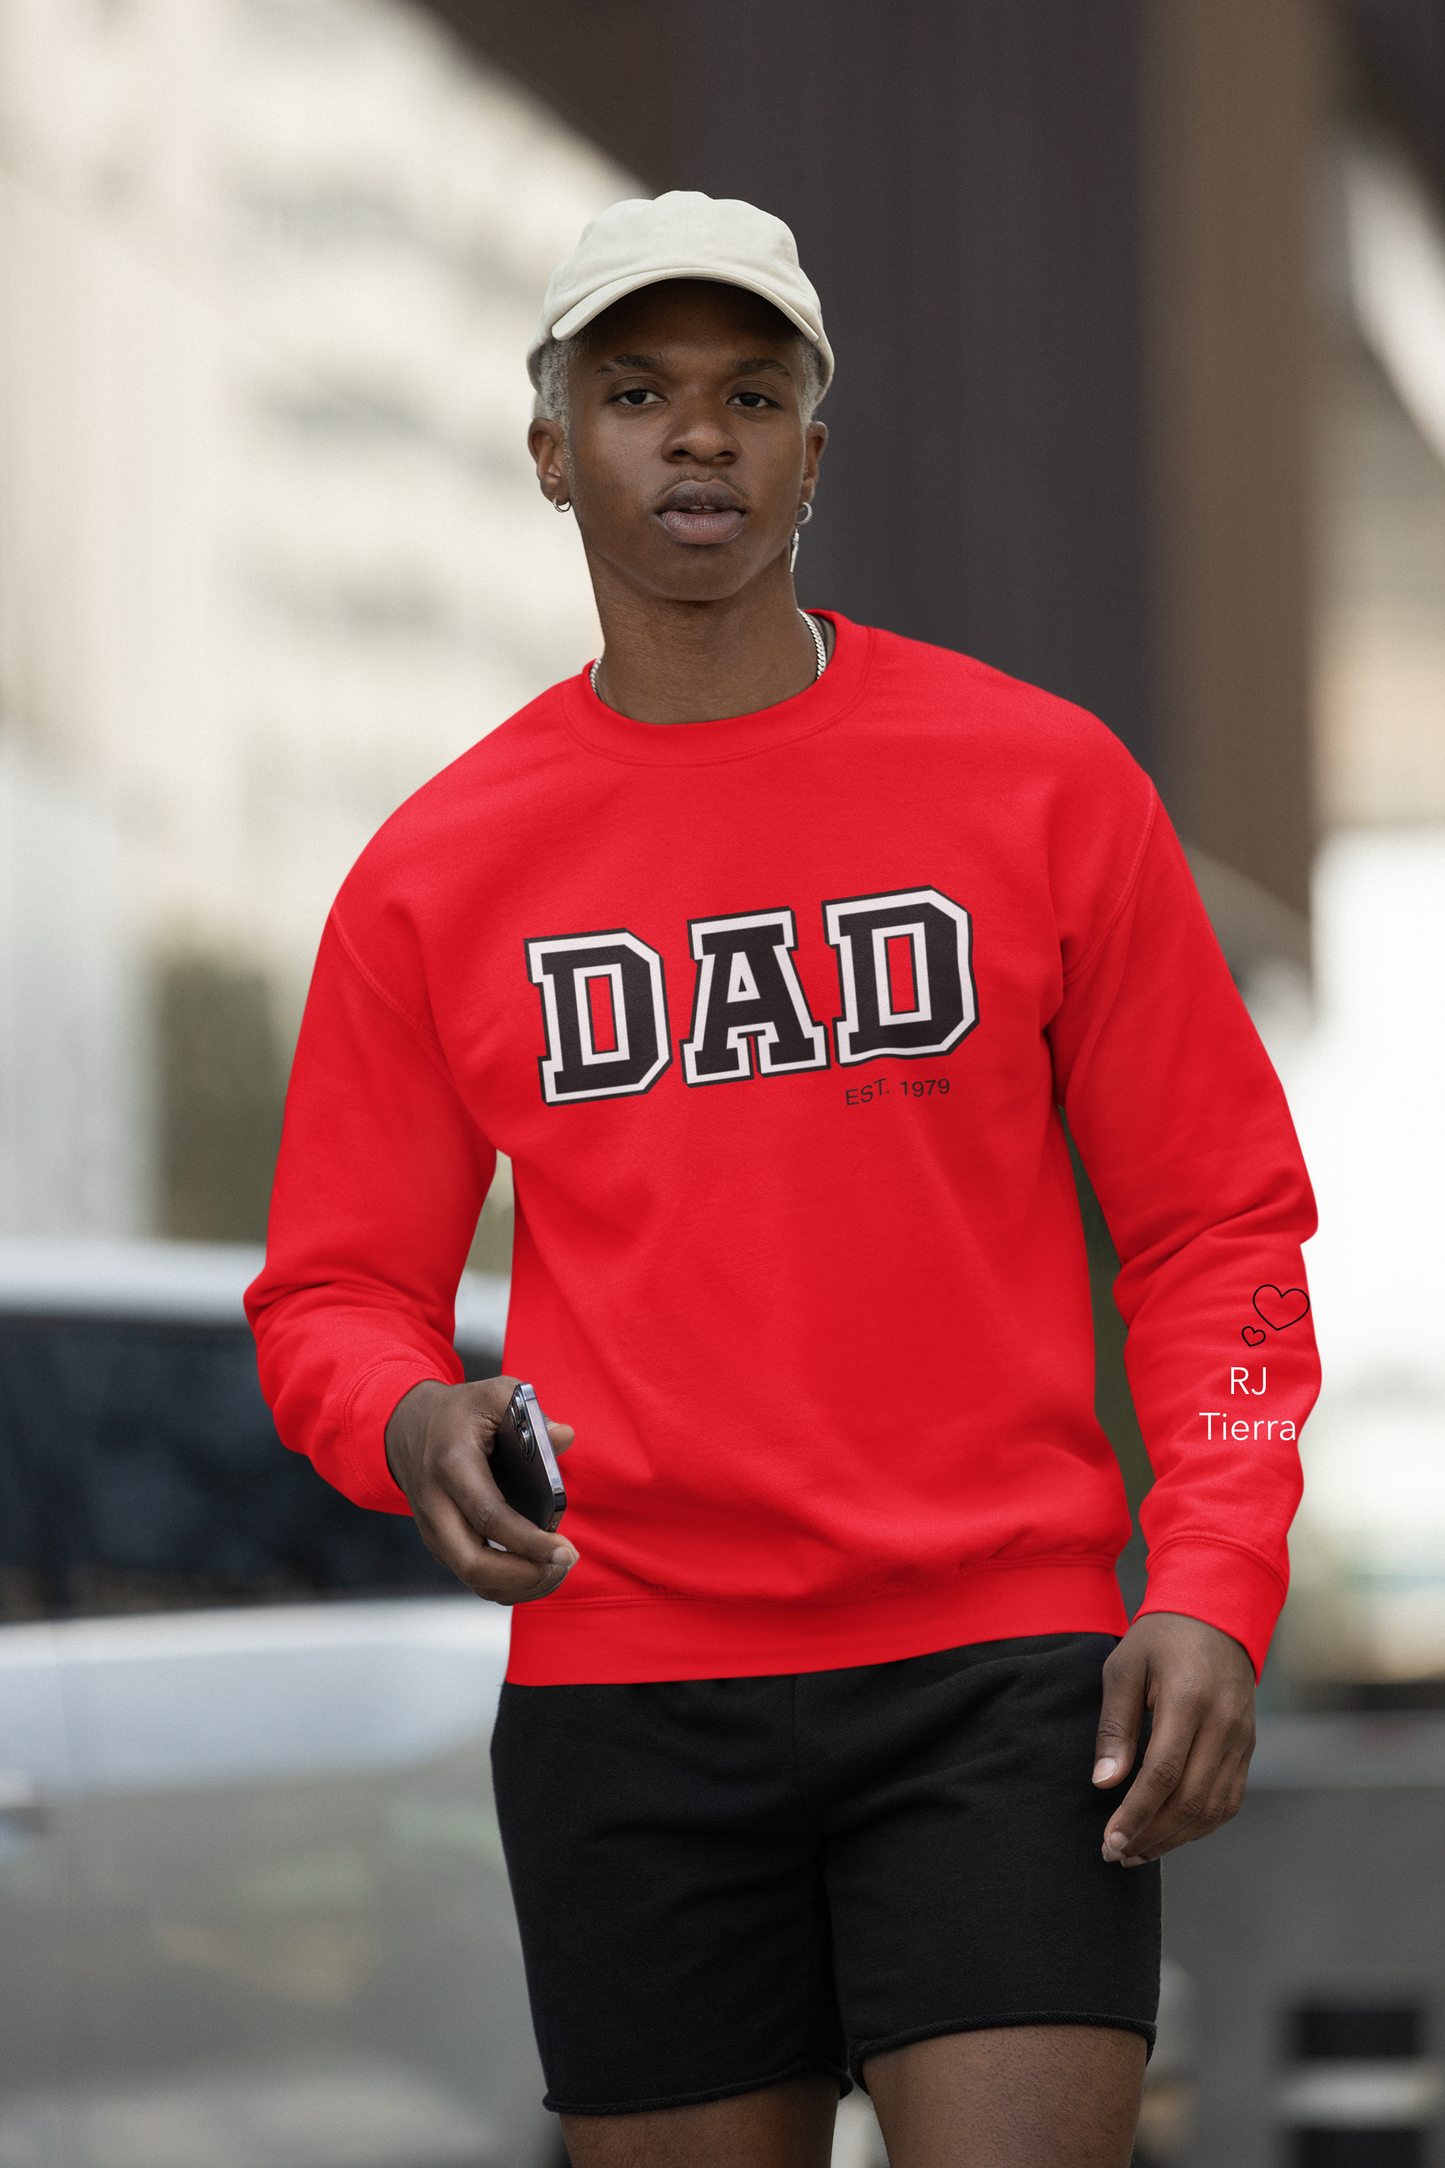 A gentleman in a red sweatshirt that read " DAD est 1979"